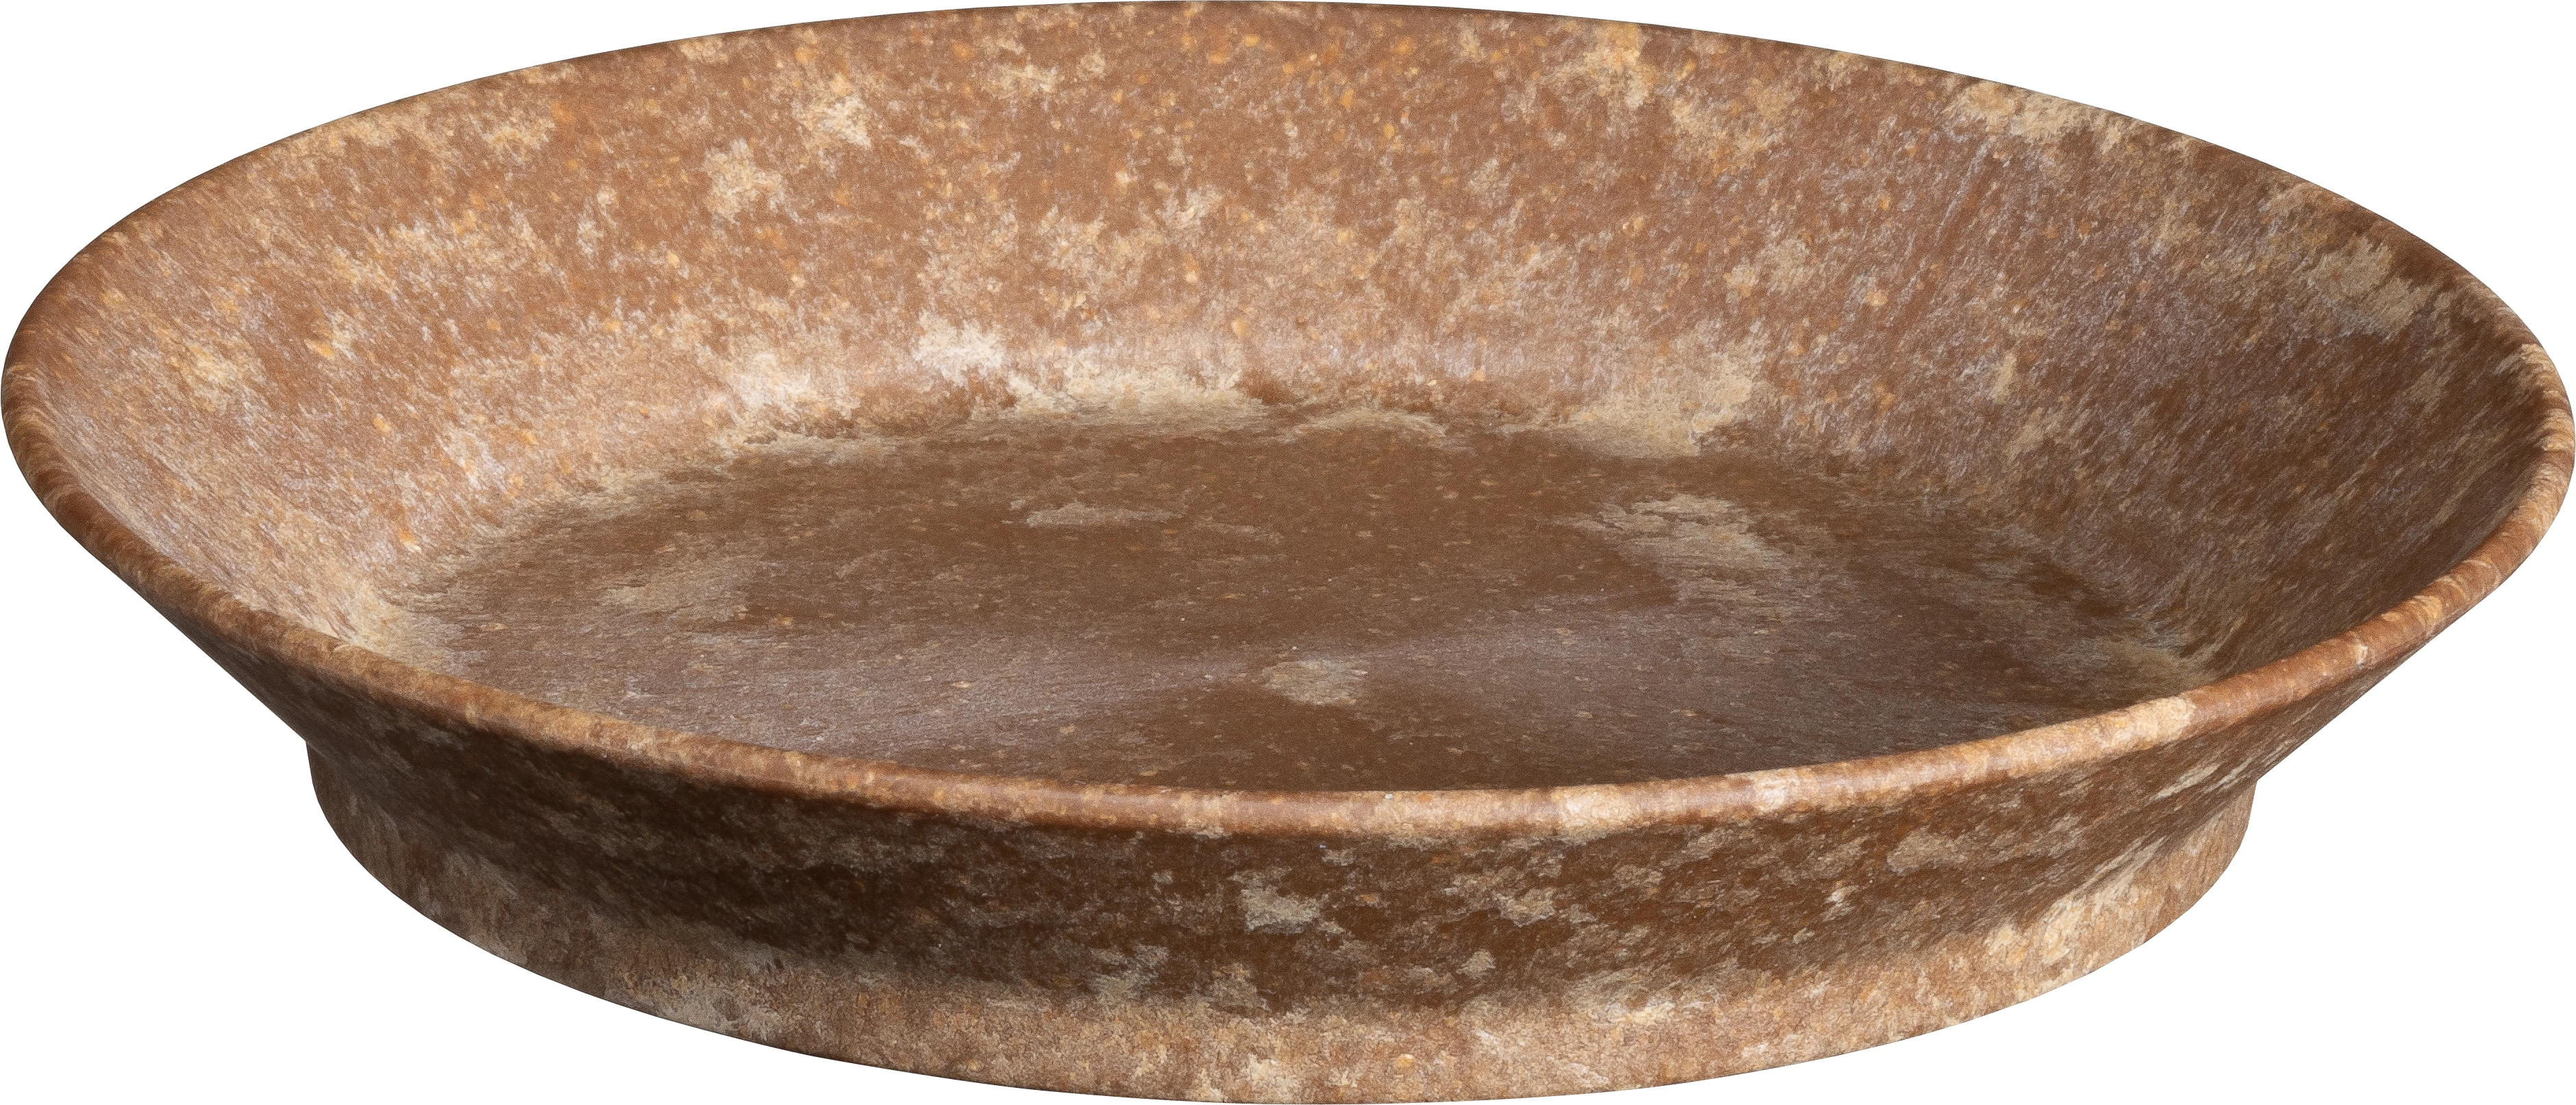 Luups tallerken uden fane, brun, ø18 cm